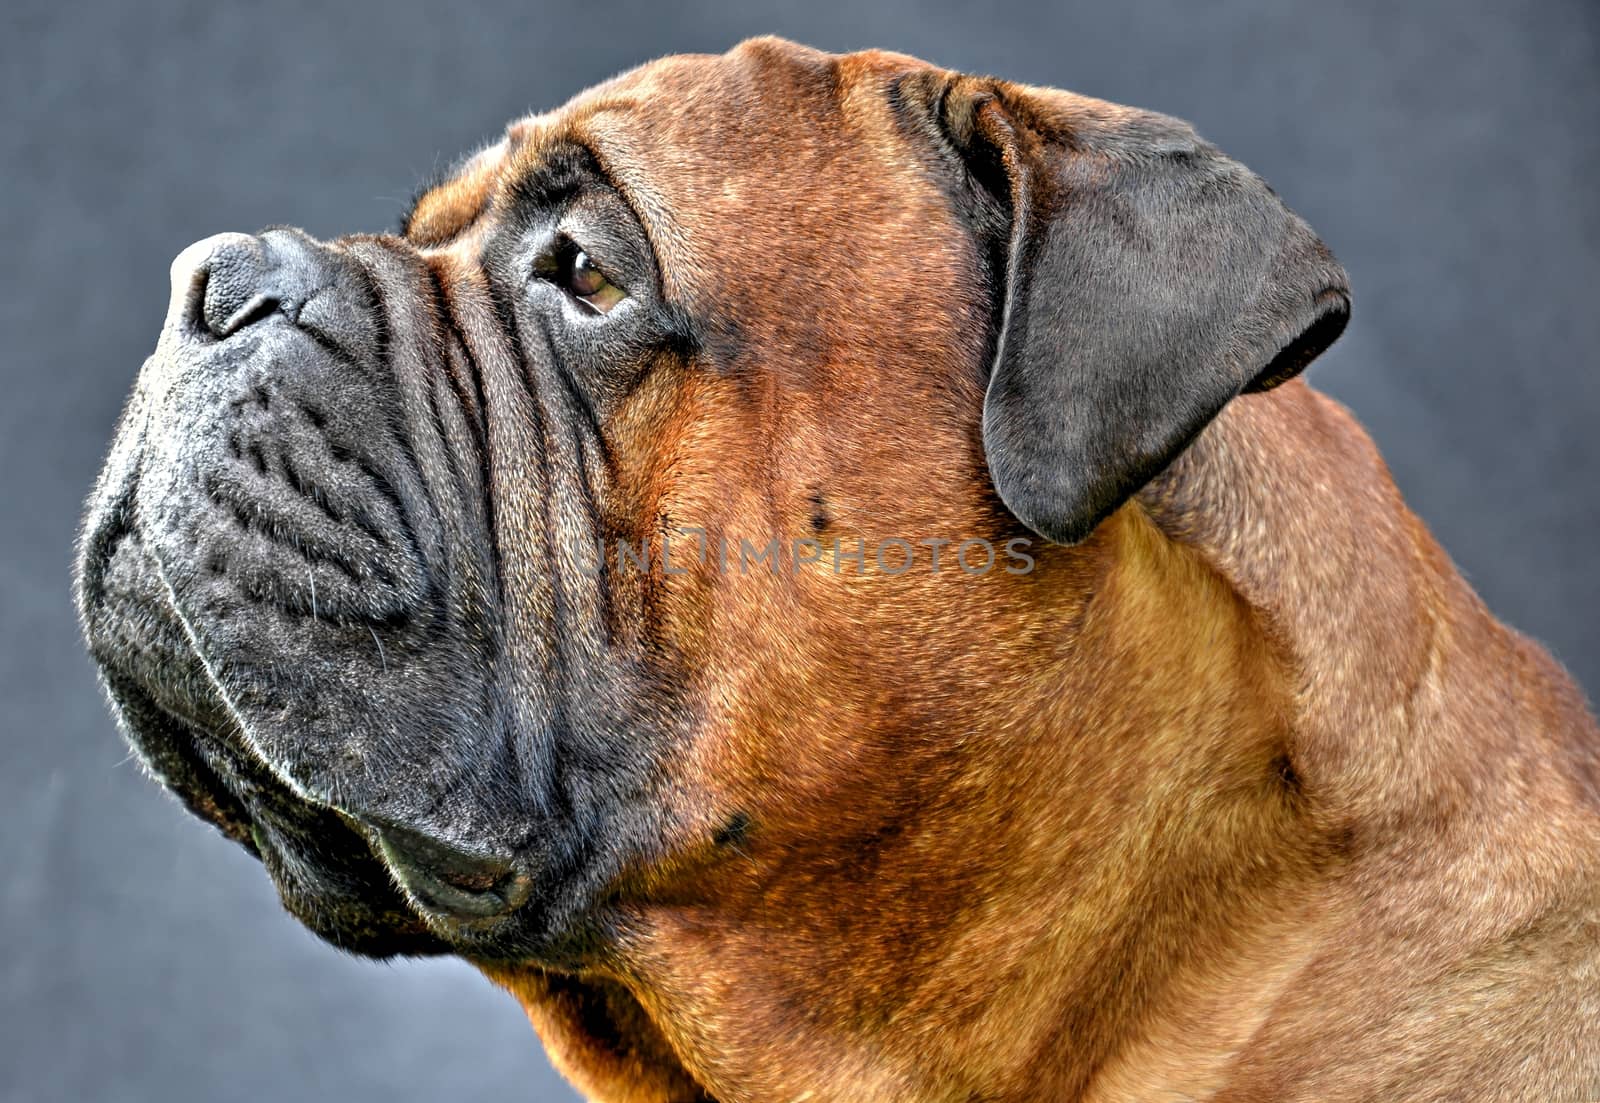 pure bred bullmastiff dog portrait close-up on dark background by Viejo